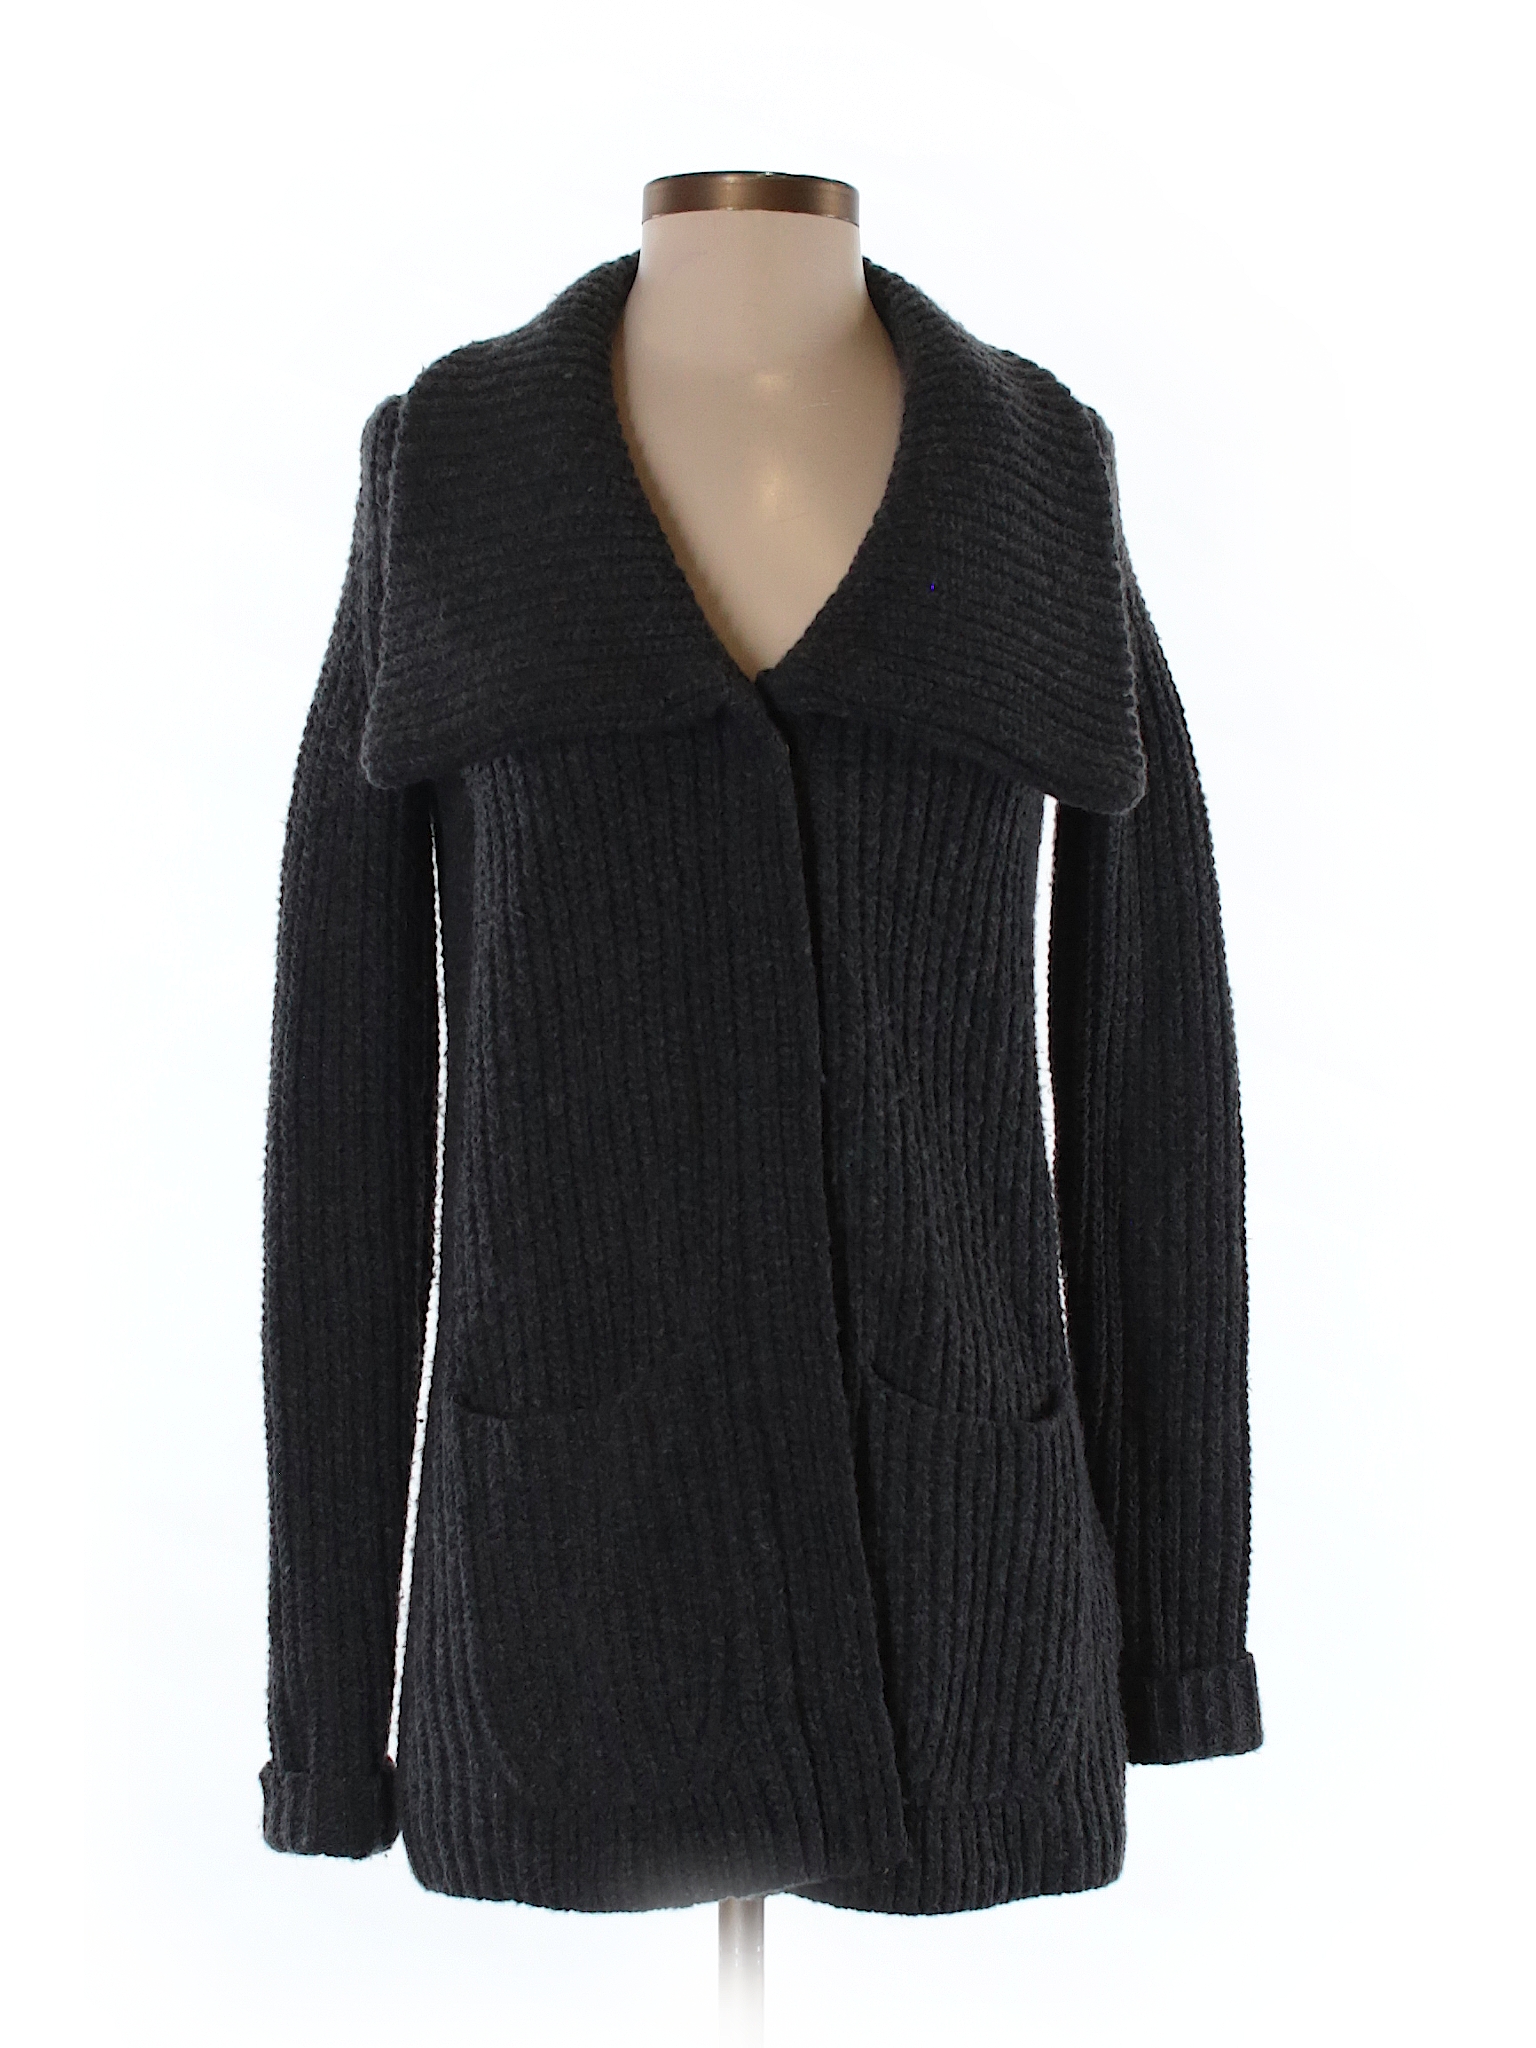 Simply Vera Vera Wang Solid Gray Cardigan Size XS - 93% off | thredUP